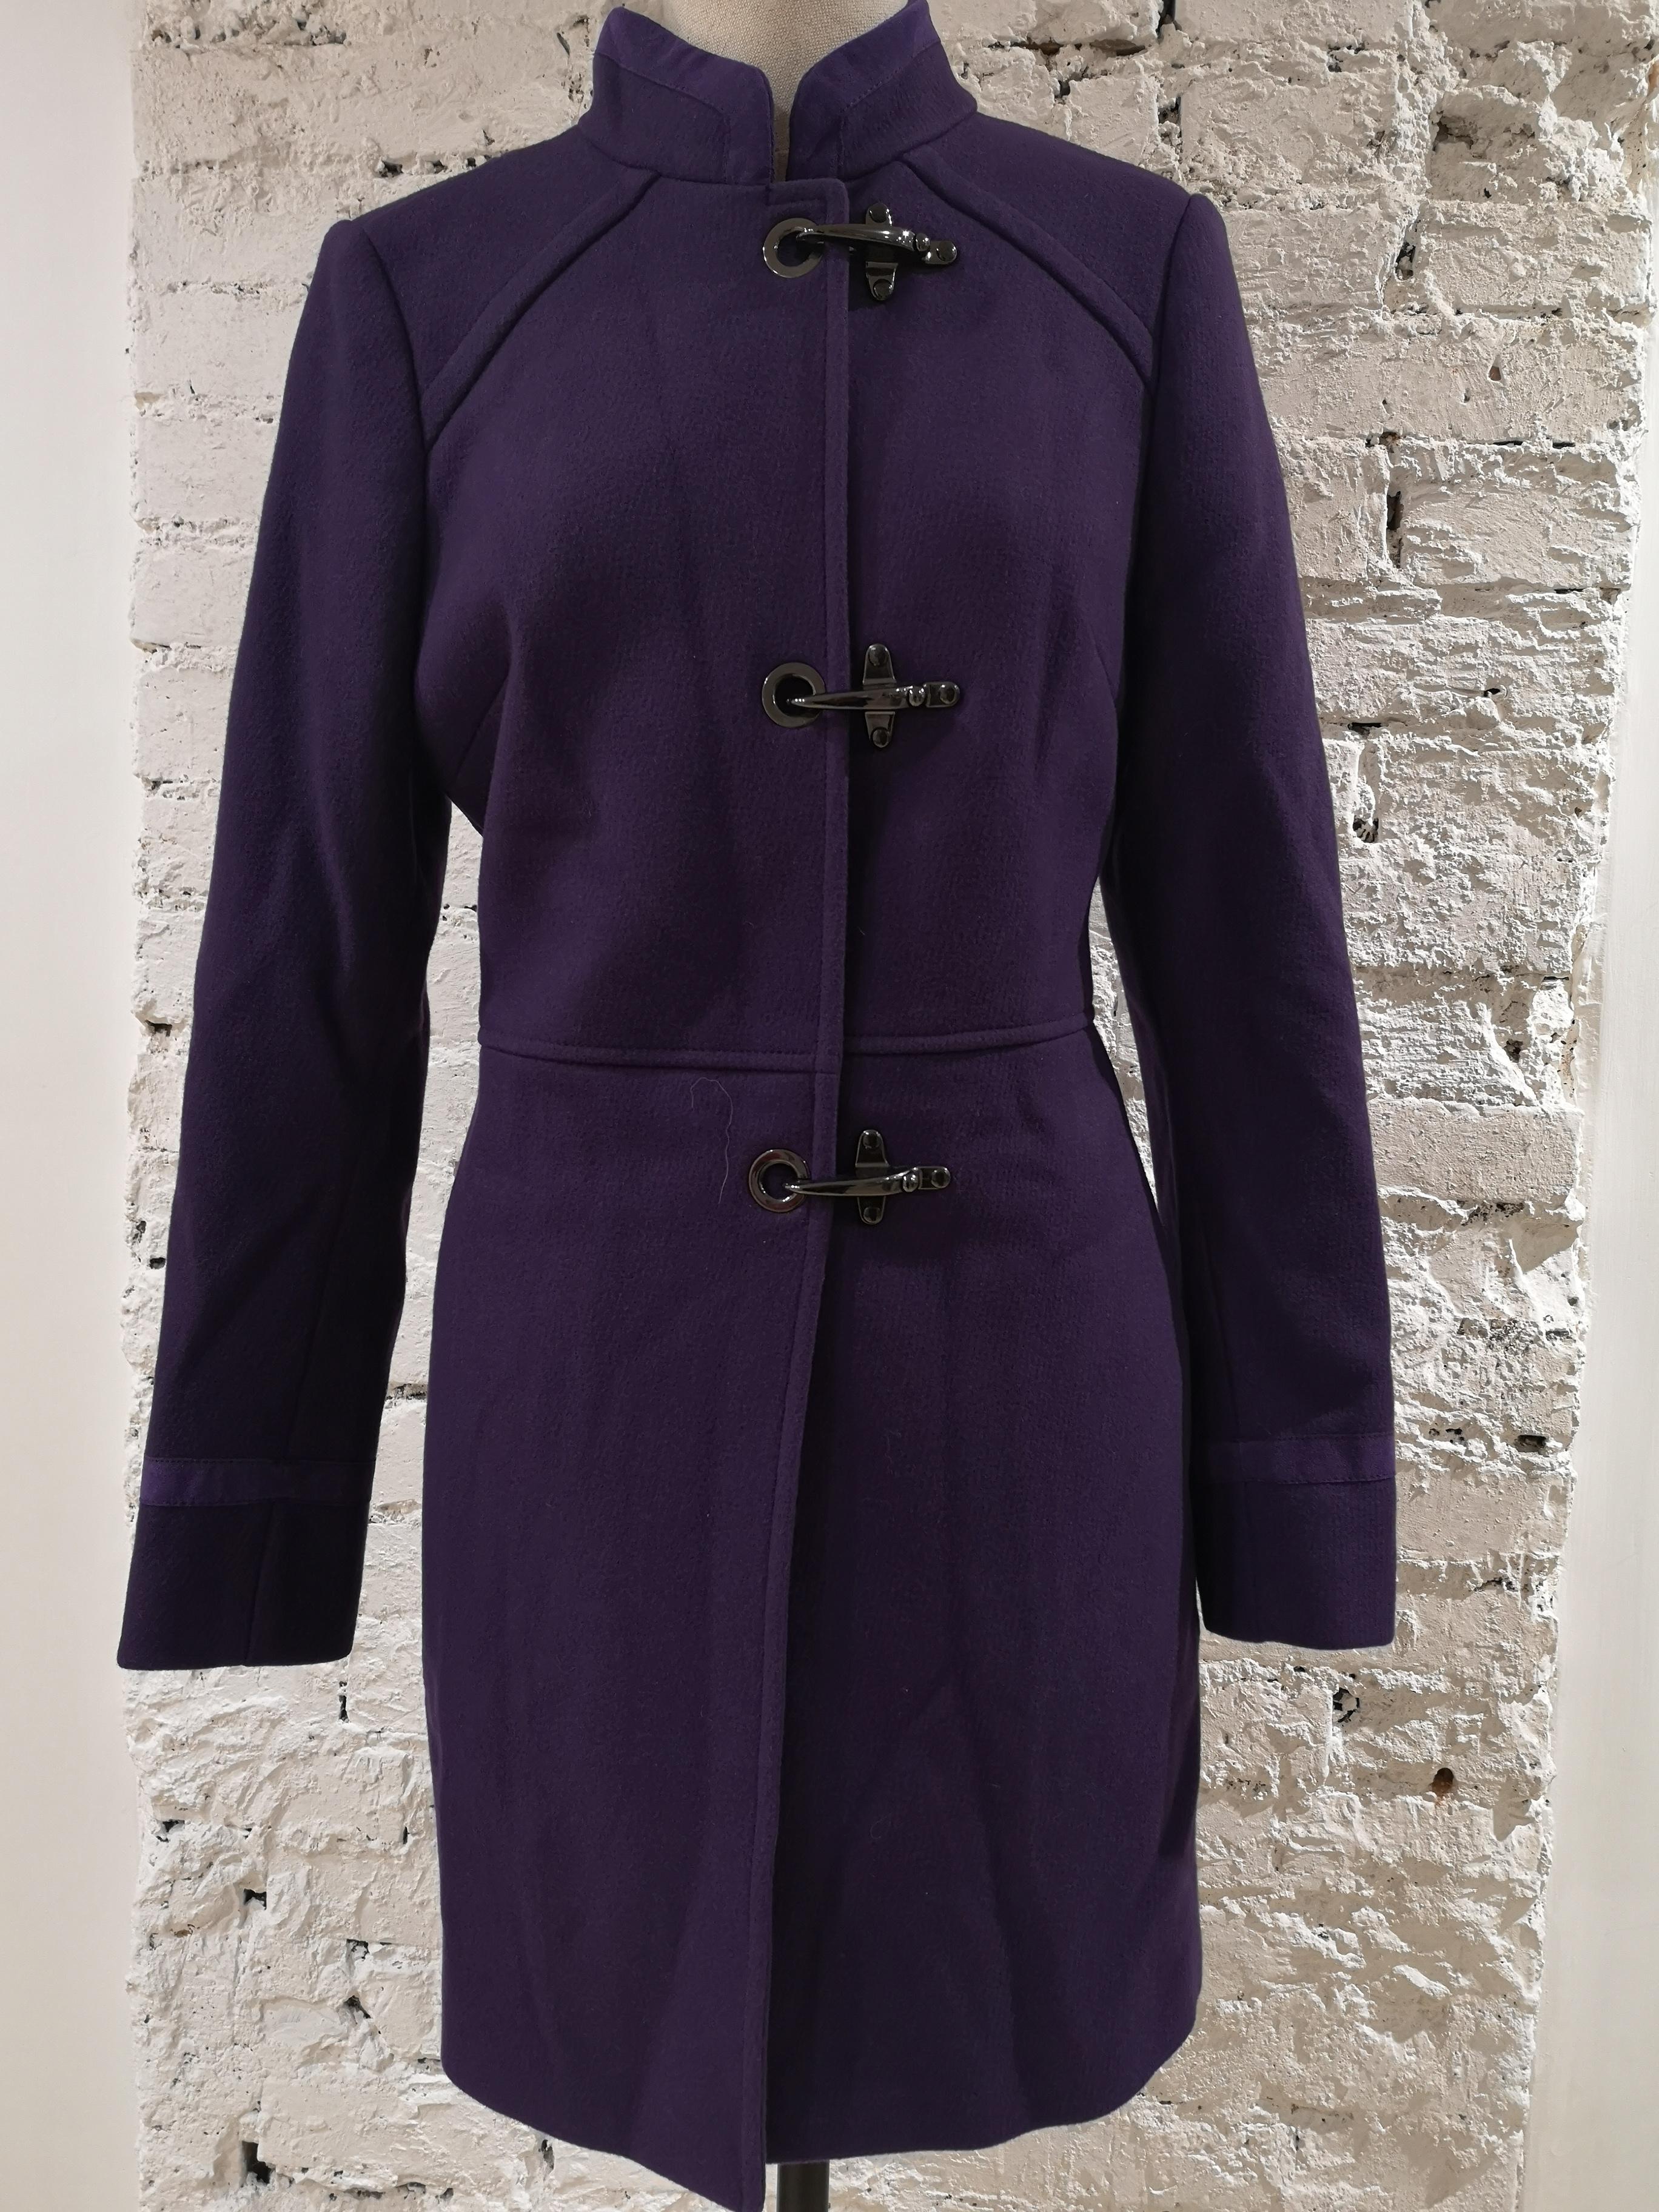 Fay purple coat
size 42